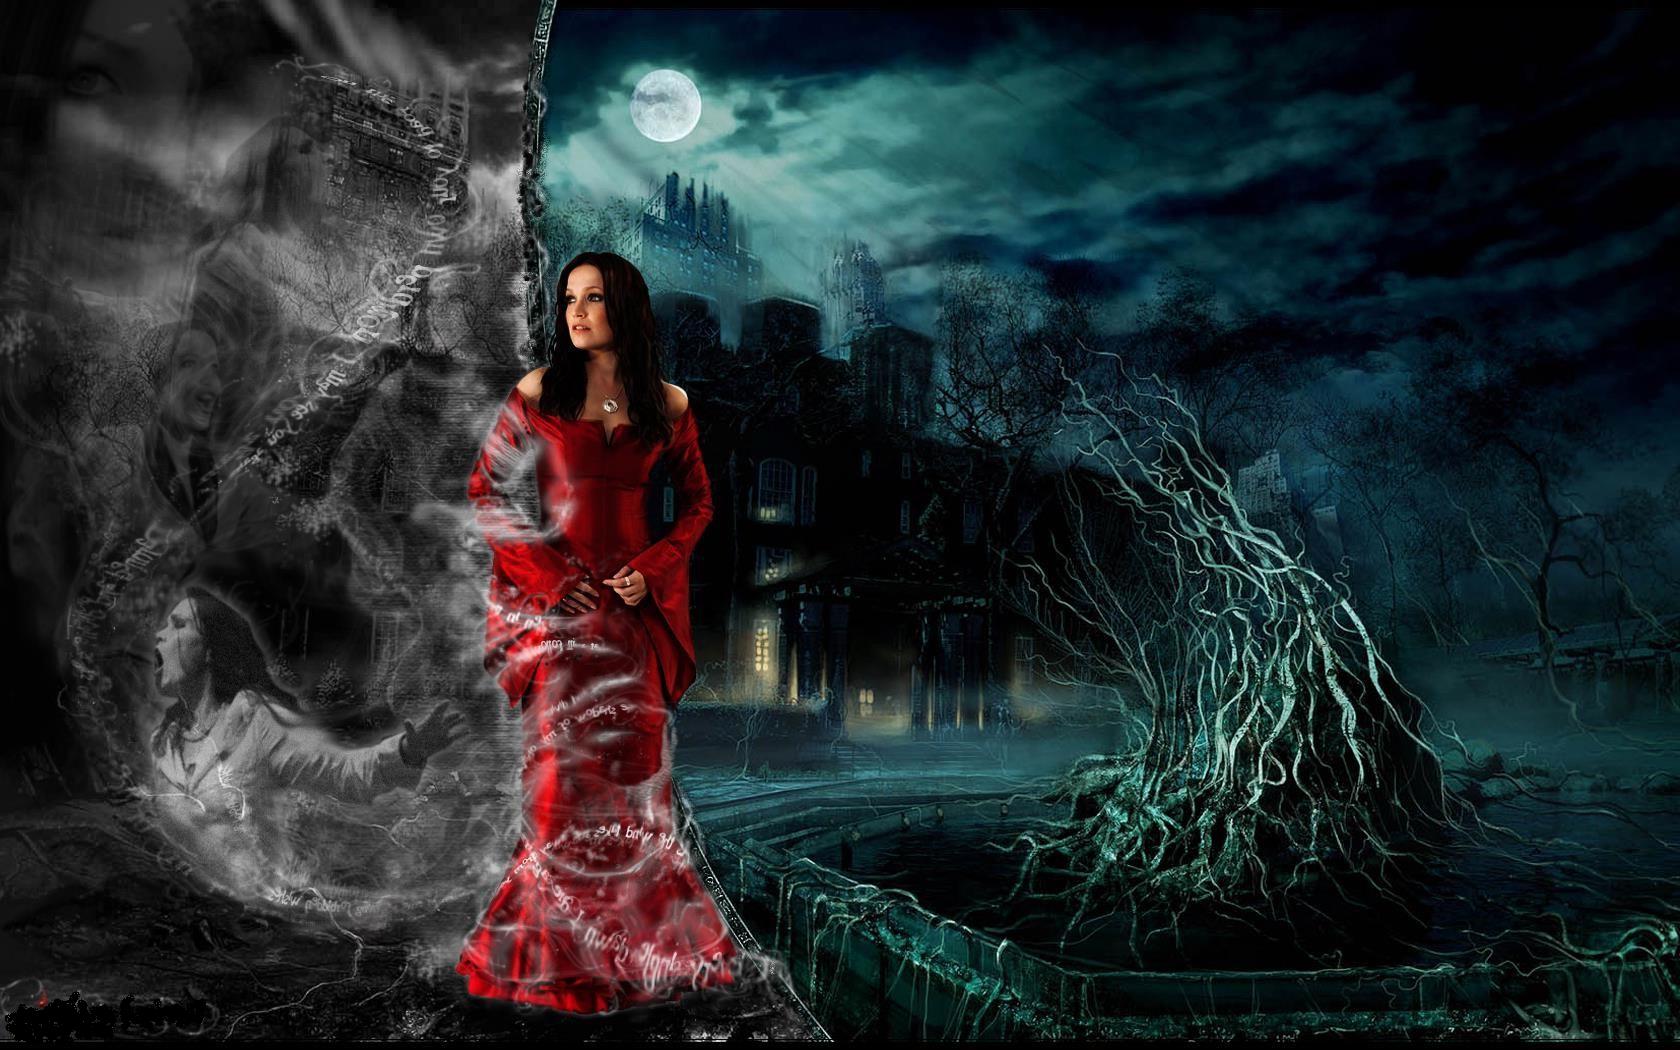 Nightwish Wallpaper And Background Image Id